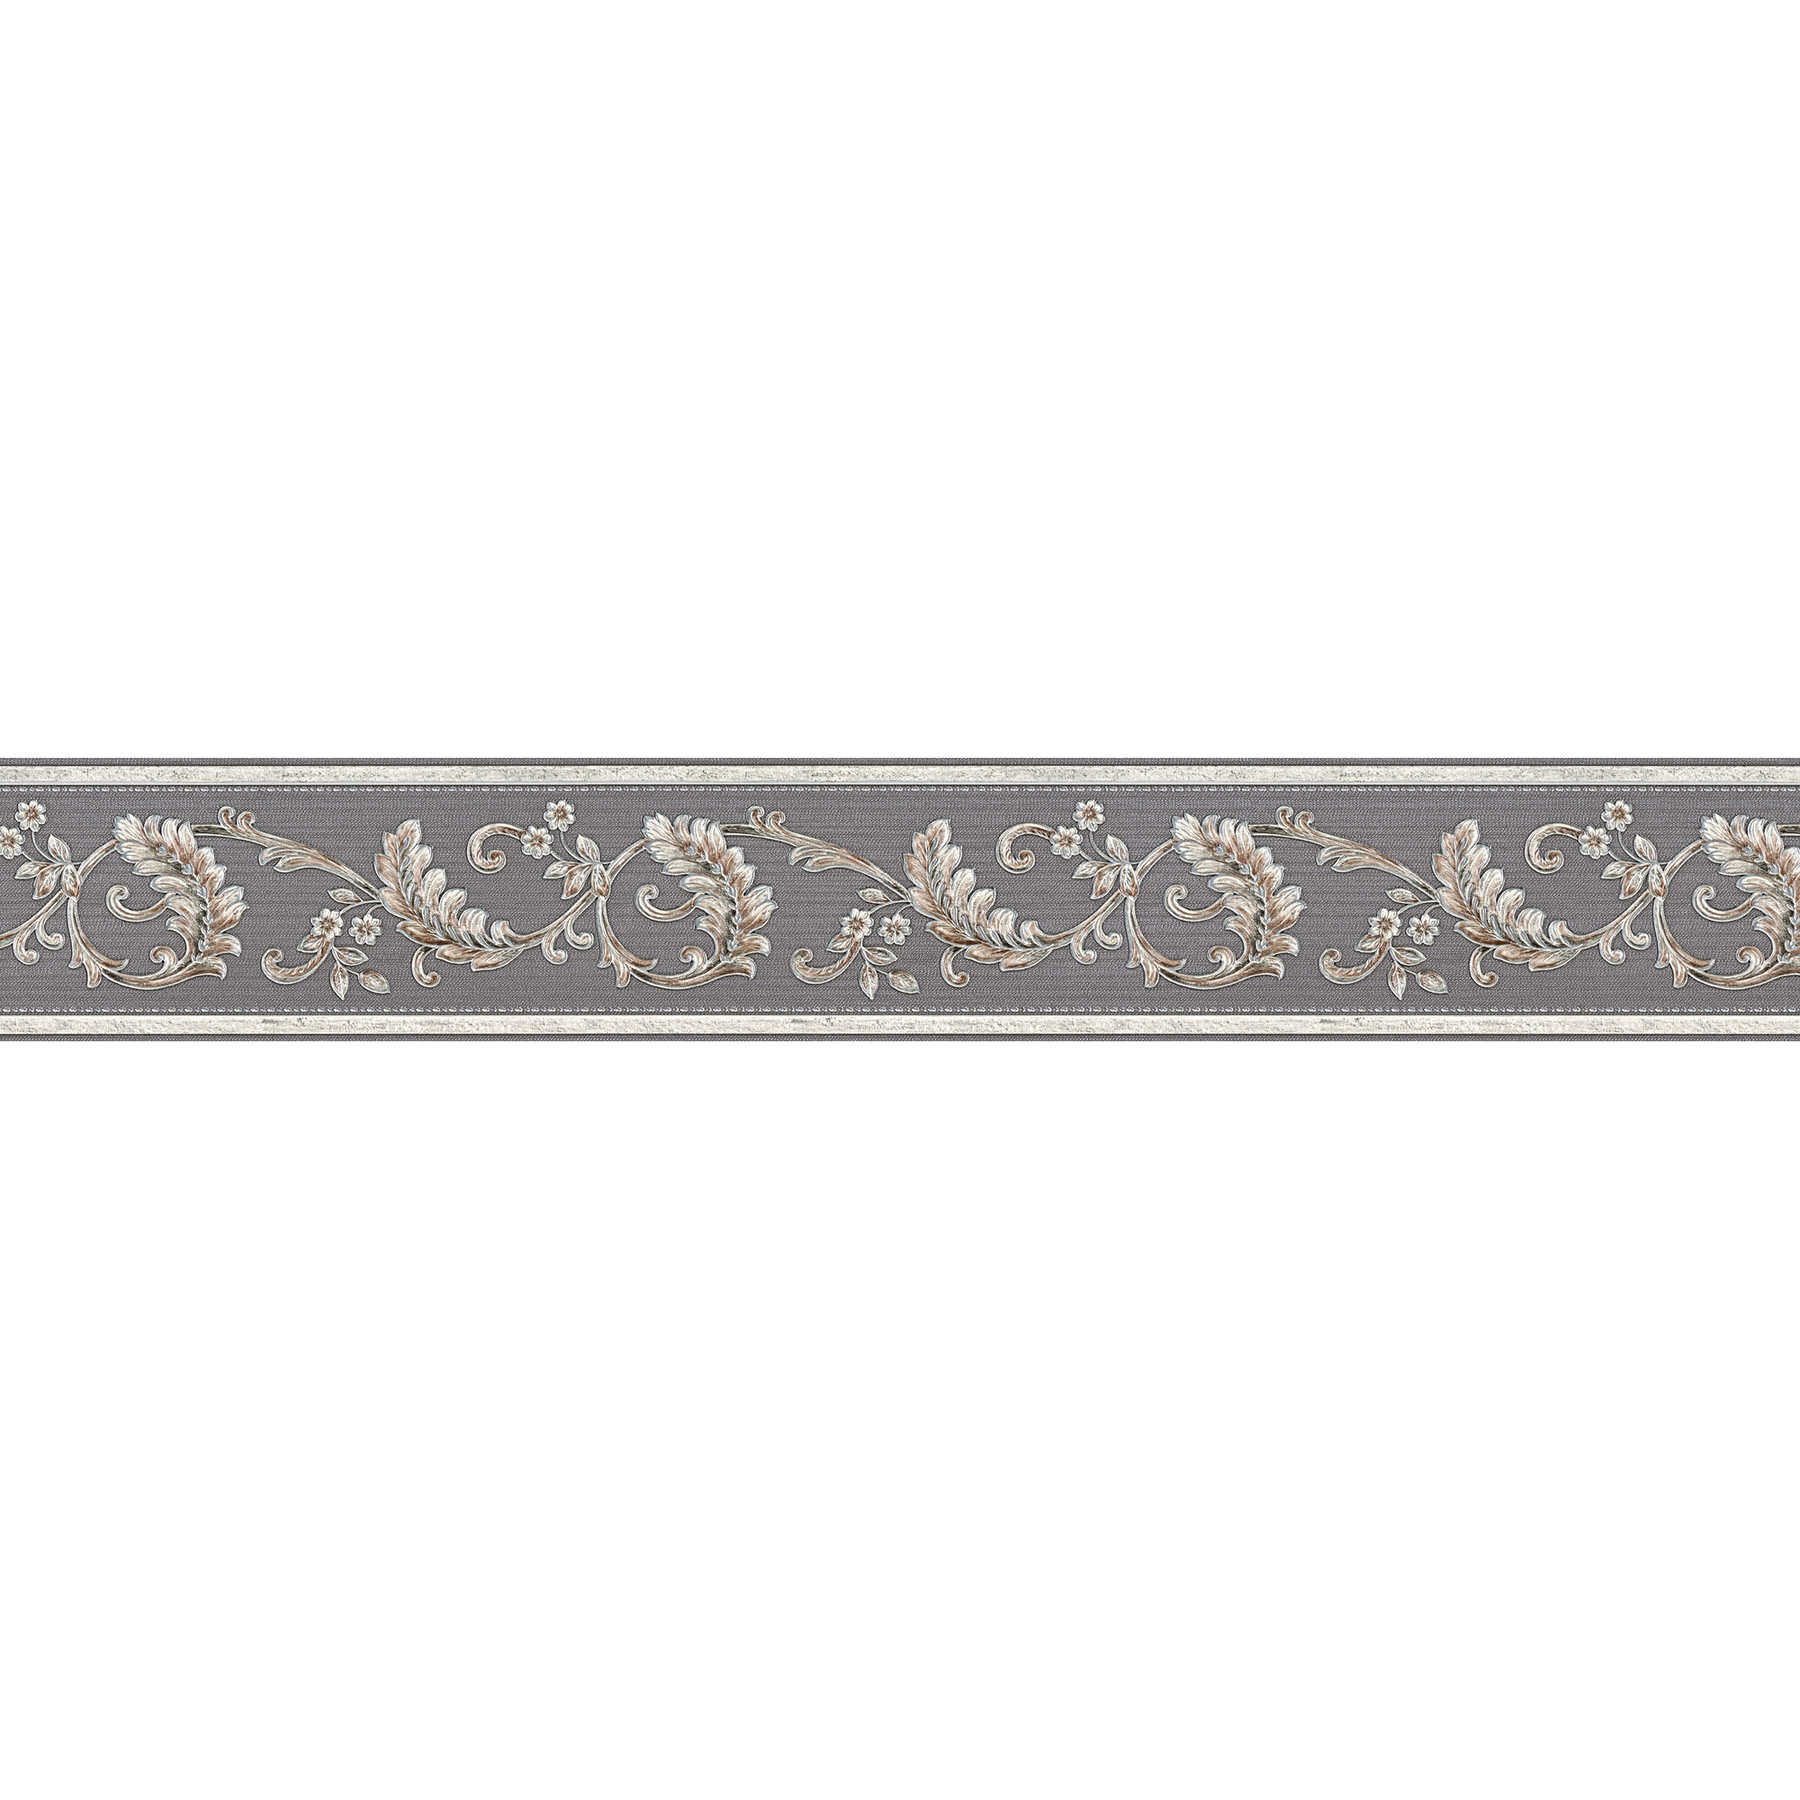 Wallpaper border with metallic effect & ornament design - grey
